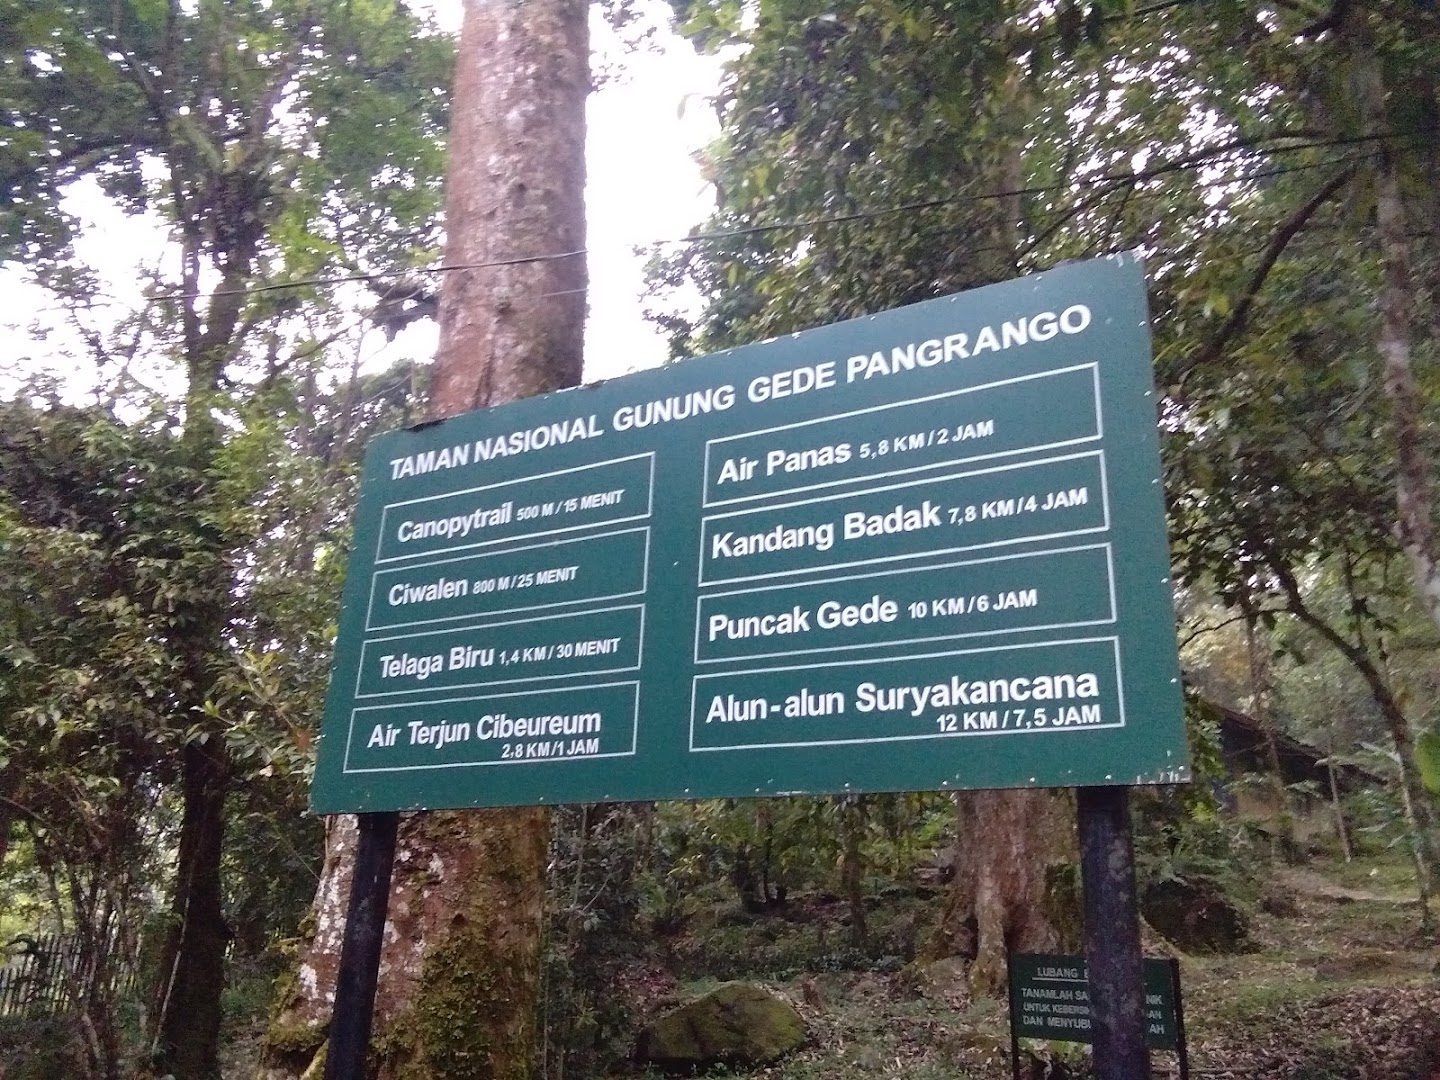 Taman Nasional Gunung Gede Pangrango Photo